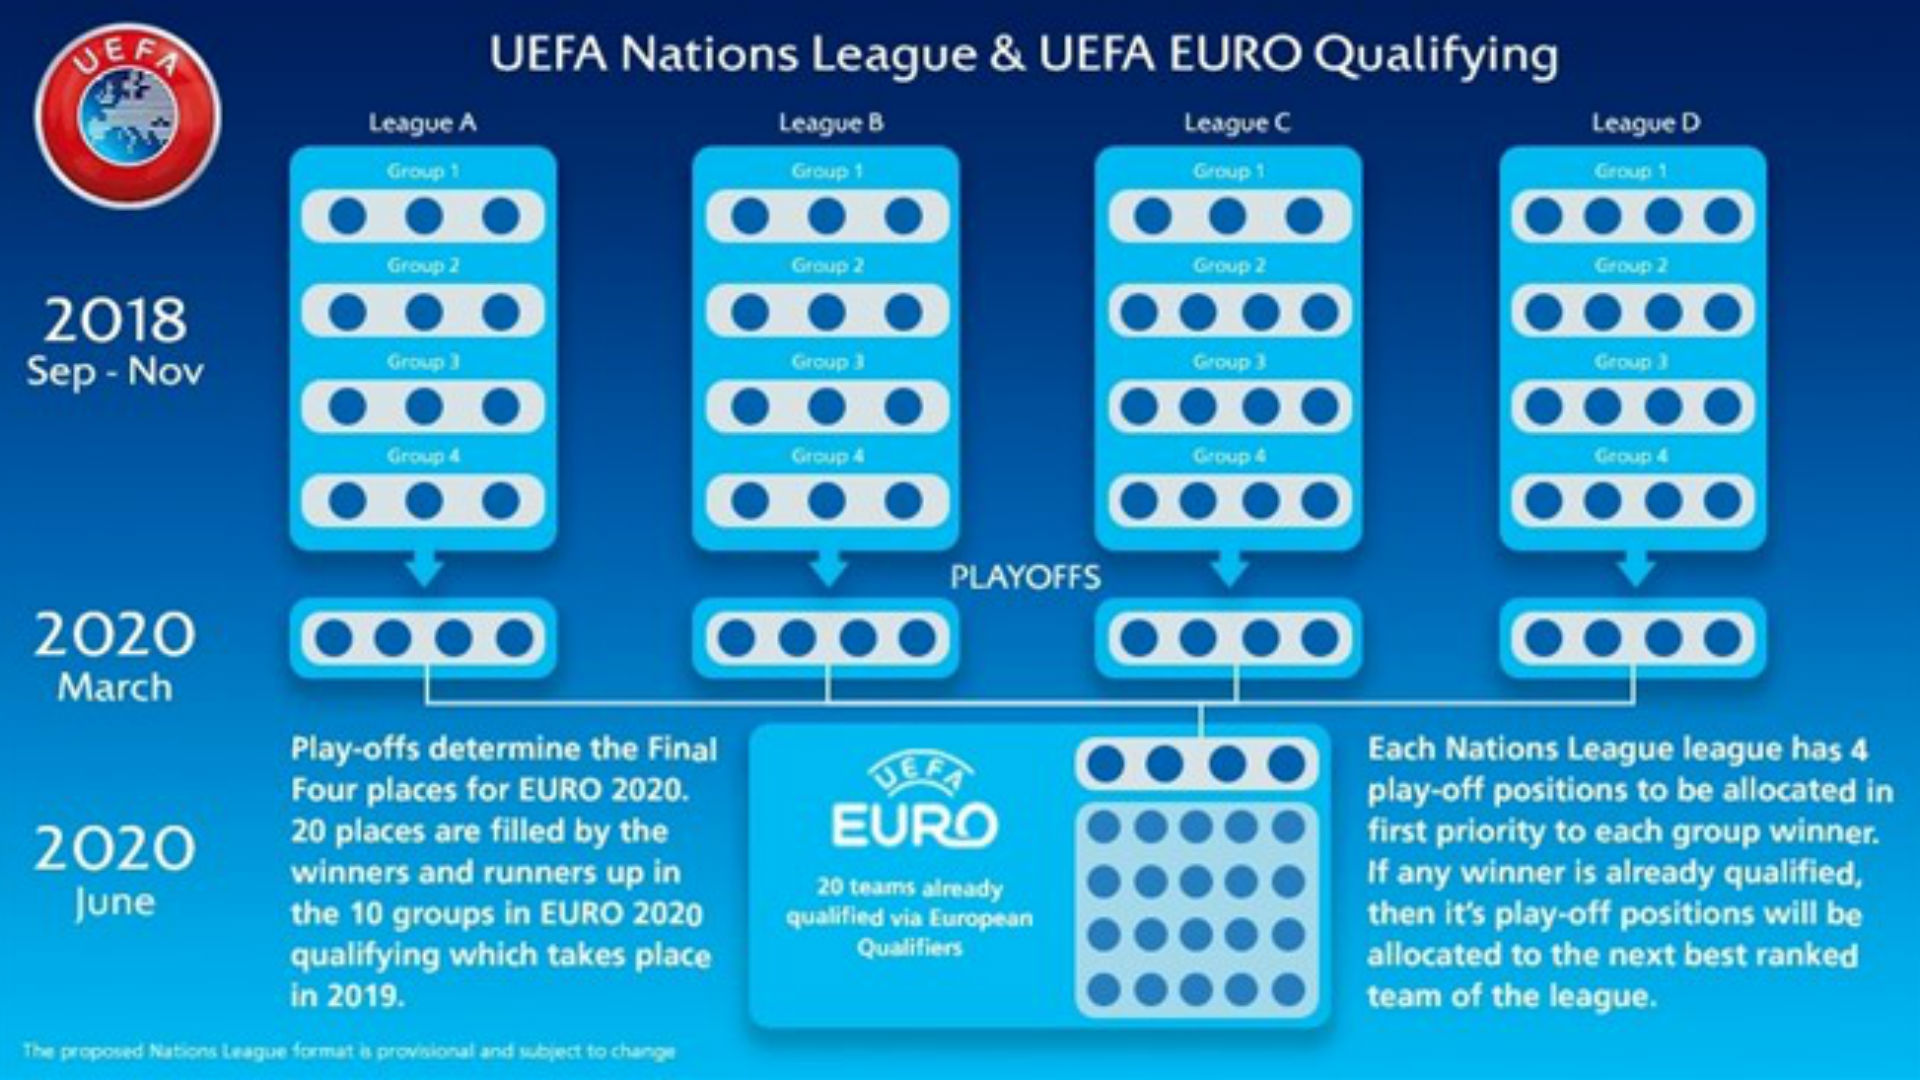 uefa-nations-league-euro-2020-qualifying_1dkogu3c2jr2u1vv1dk50nkbyo.jpg